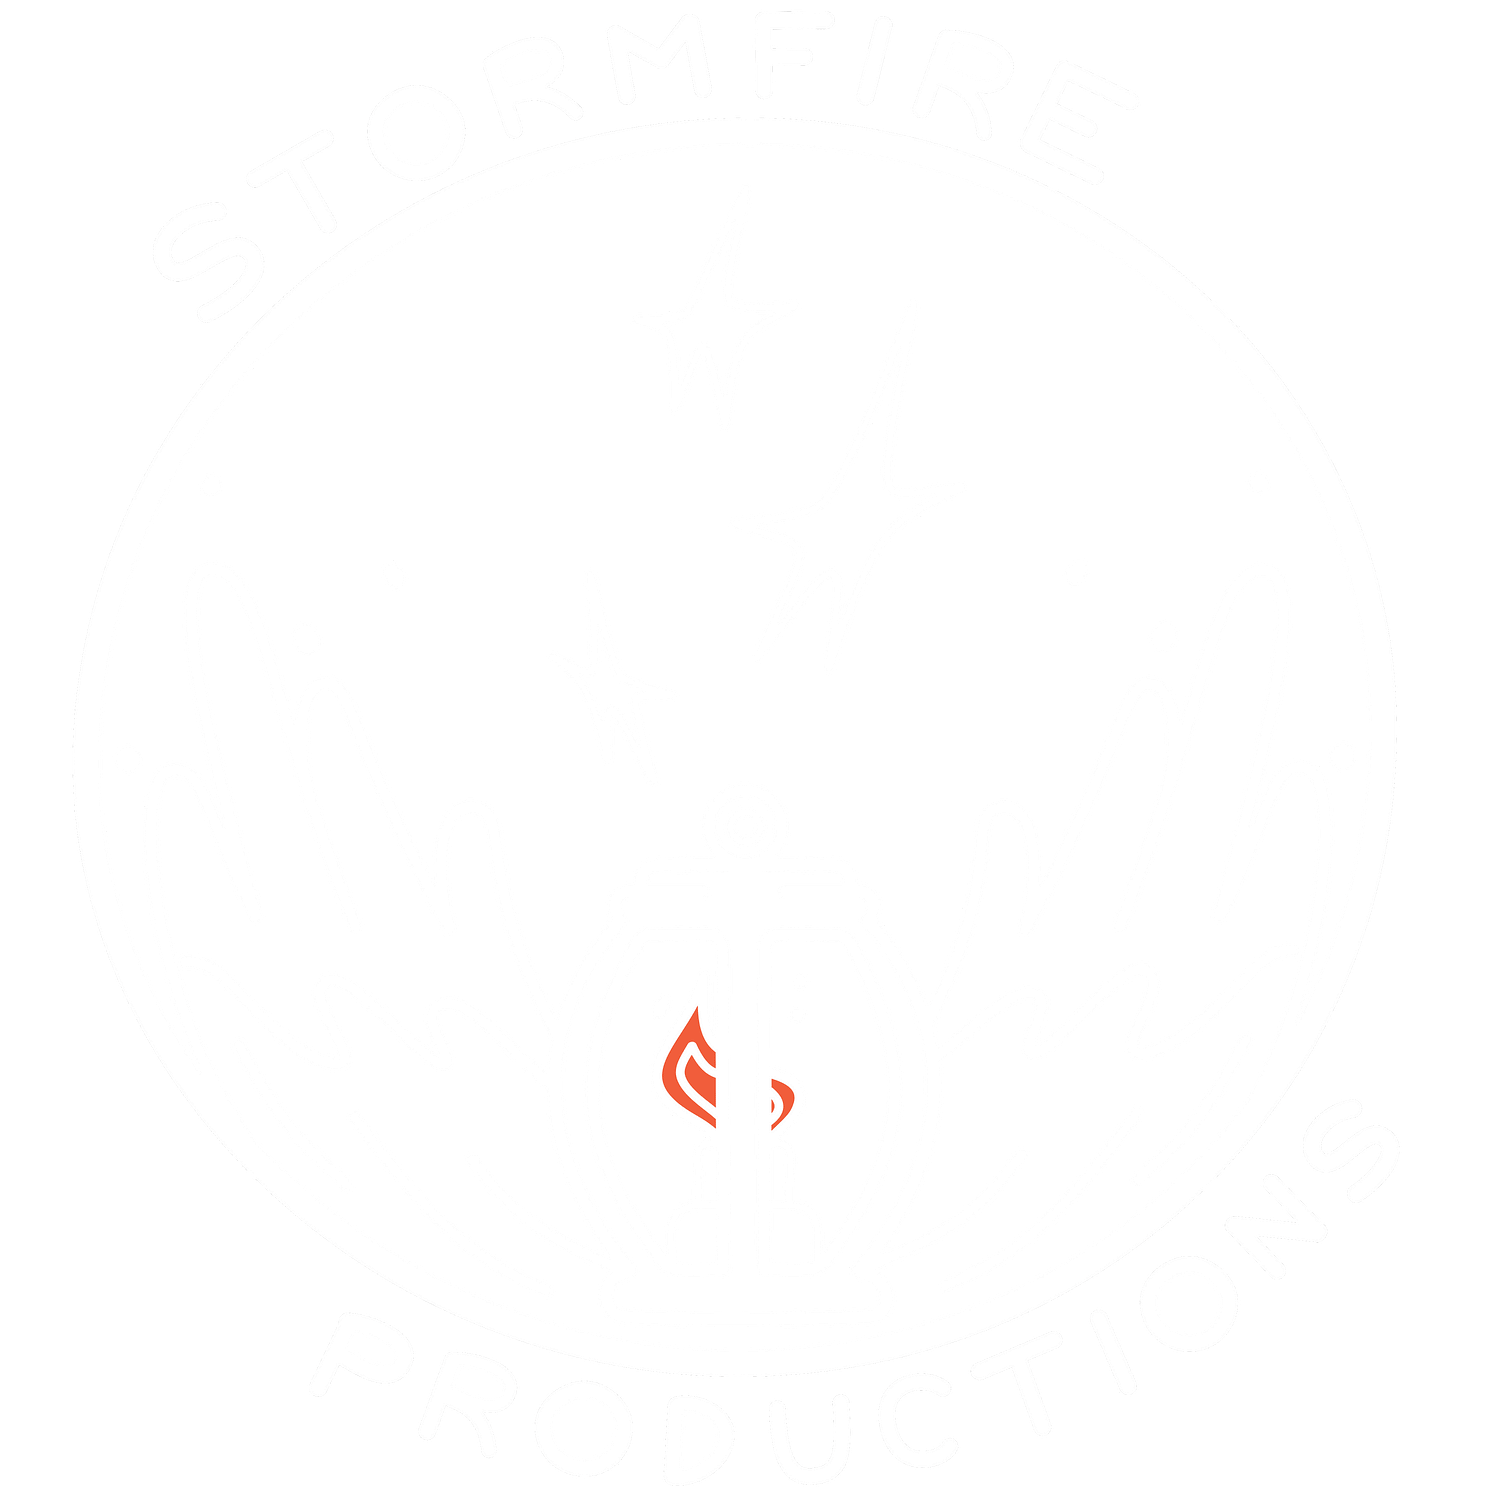 Stormfire Productions